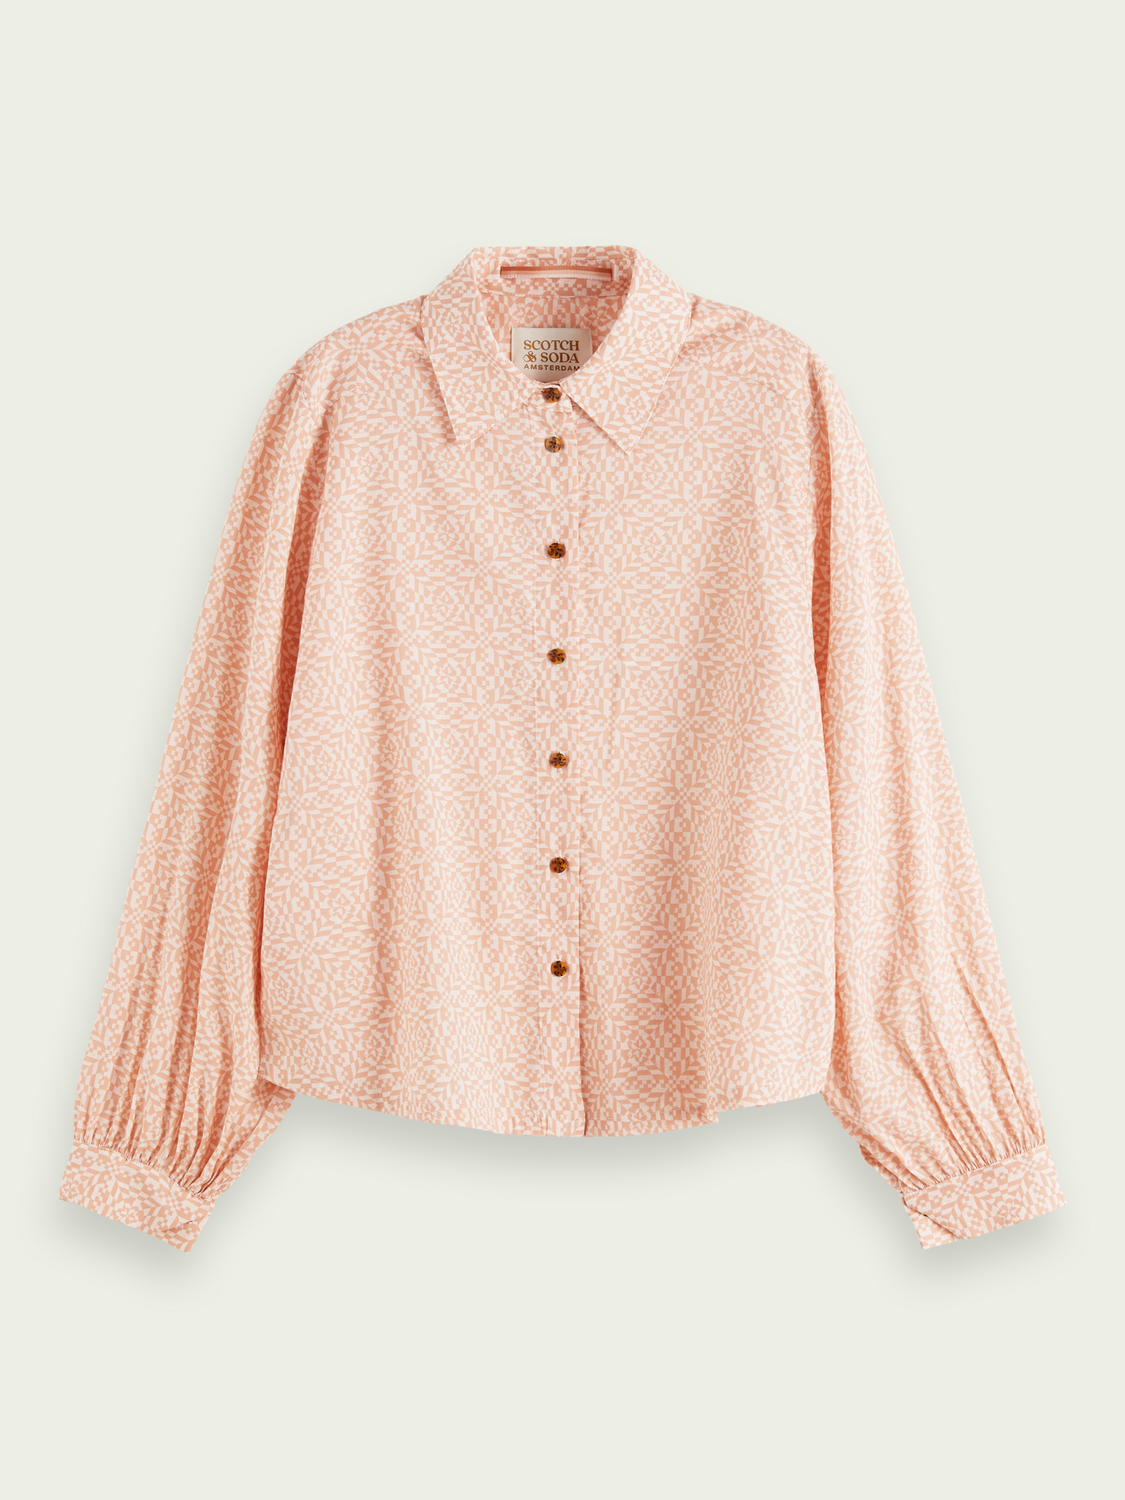 Maison Scotch - Printed Organic Cotton Shirt - Coral